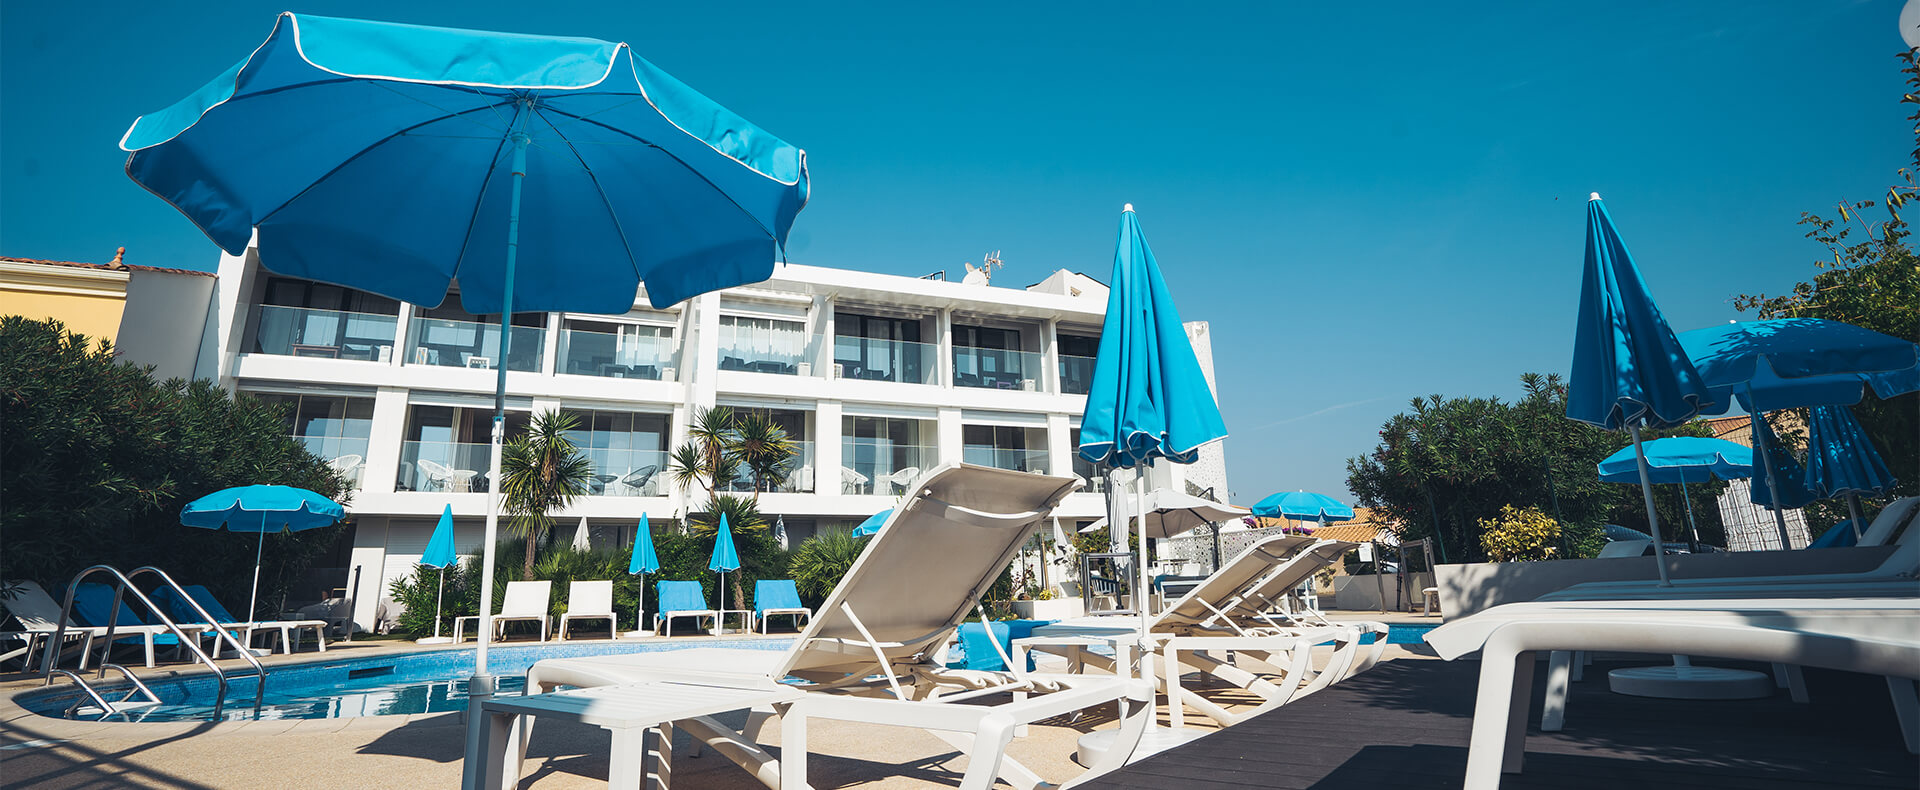 Piscina Hotel Eve, Hotel Naturismo en Cap d'Agde